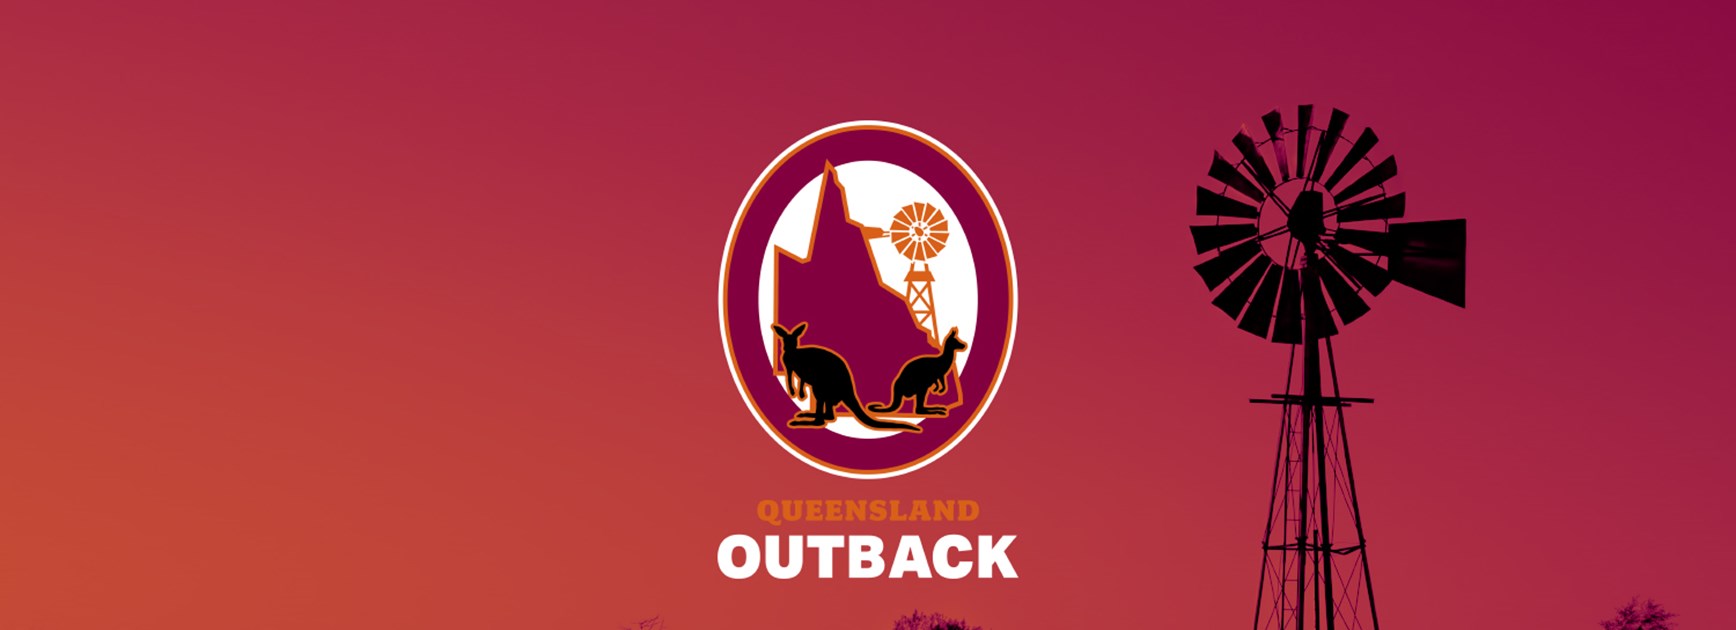 Capturing country essence: Queensland Outback logo revealed